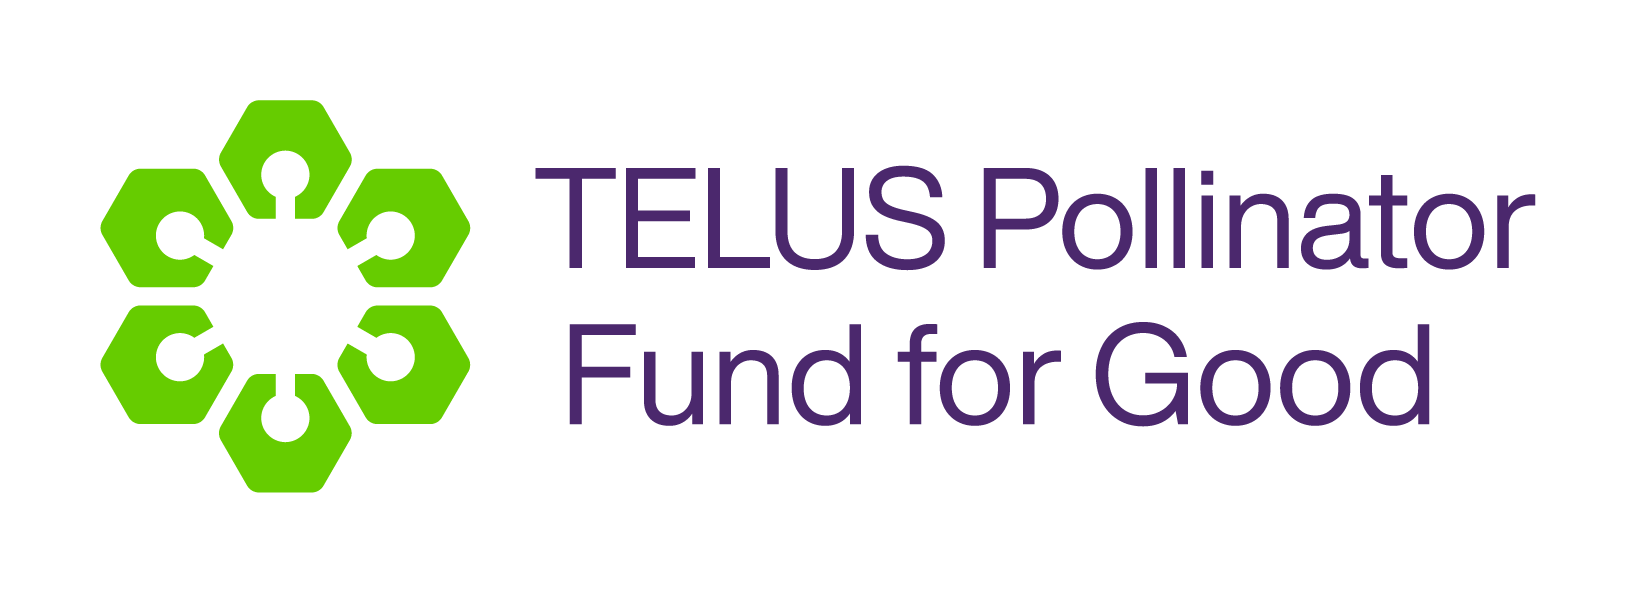 Telus Pollinator Fund for Good logo